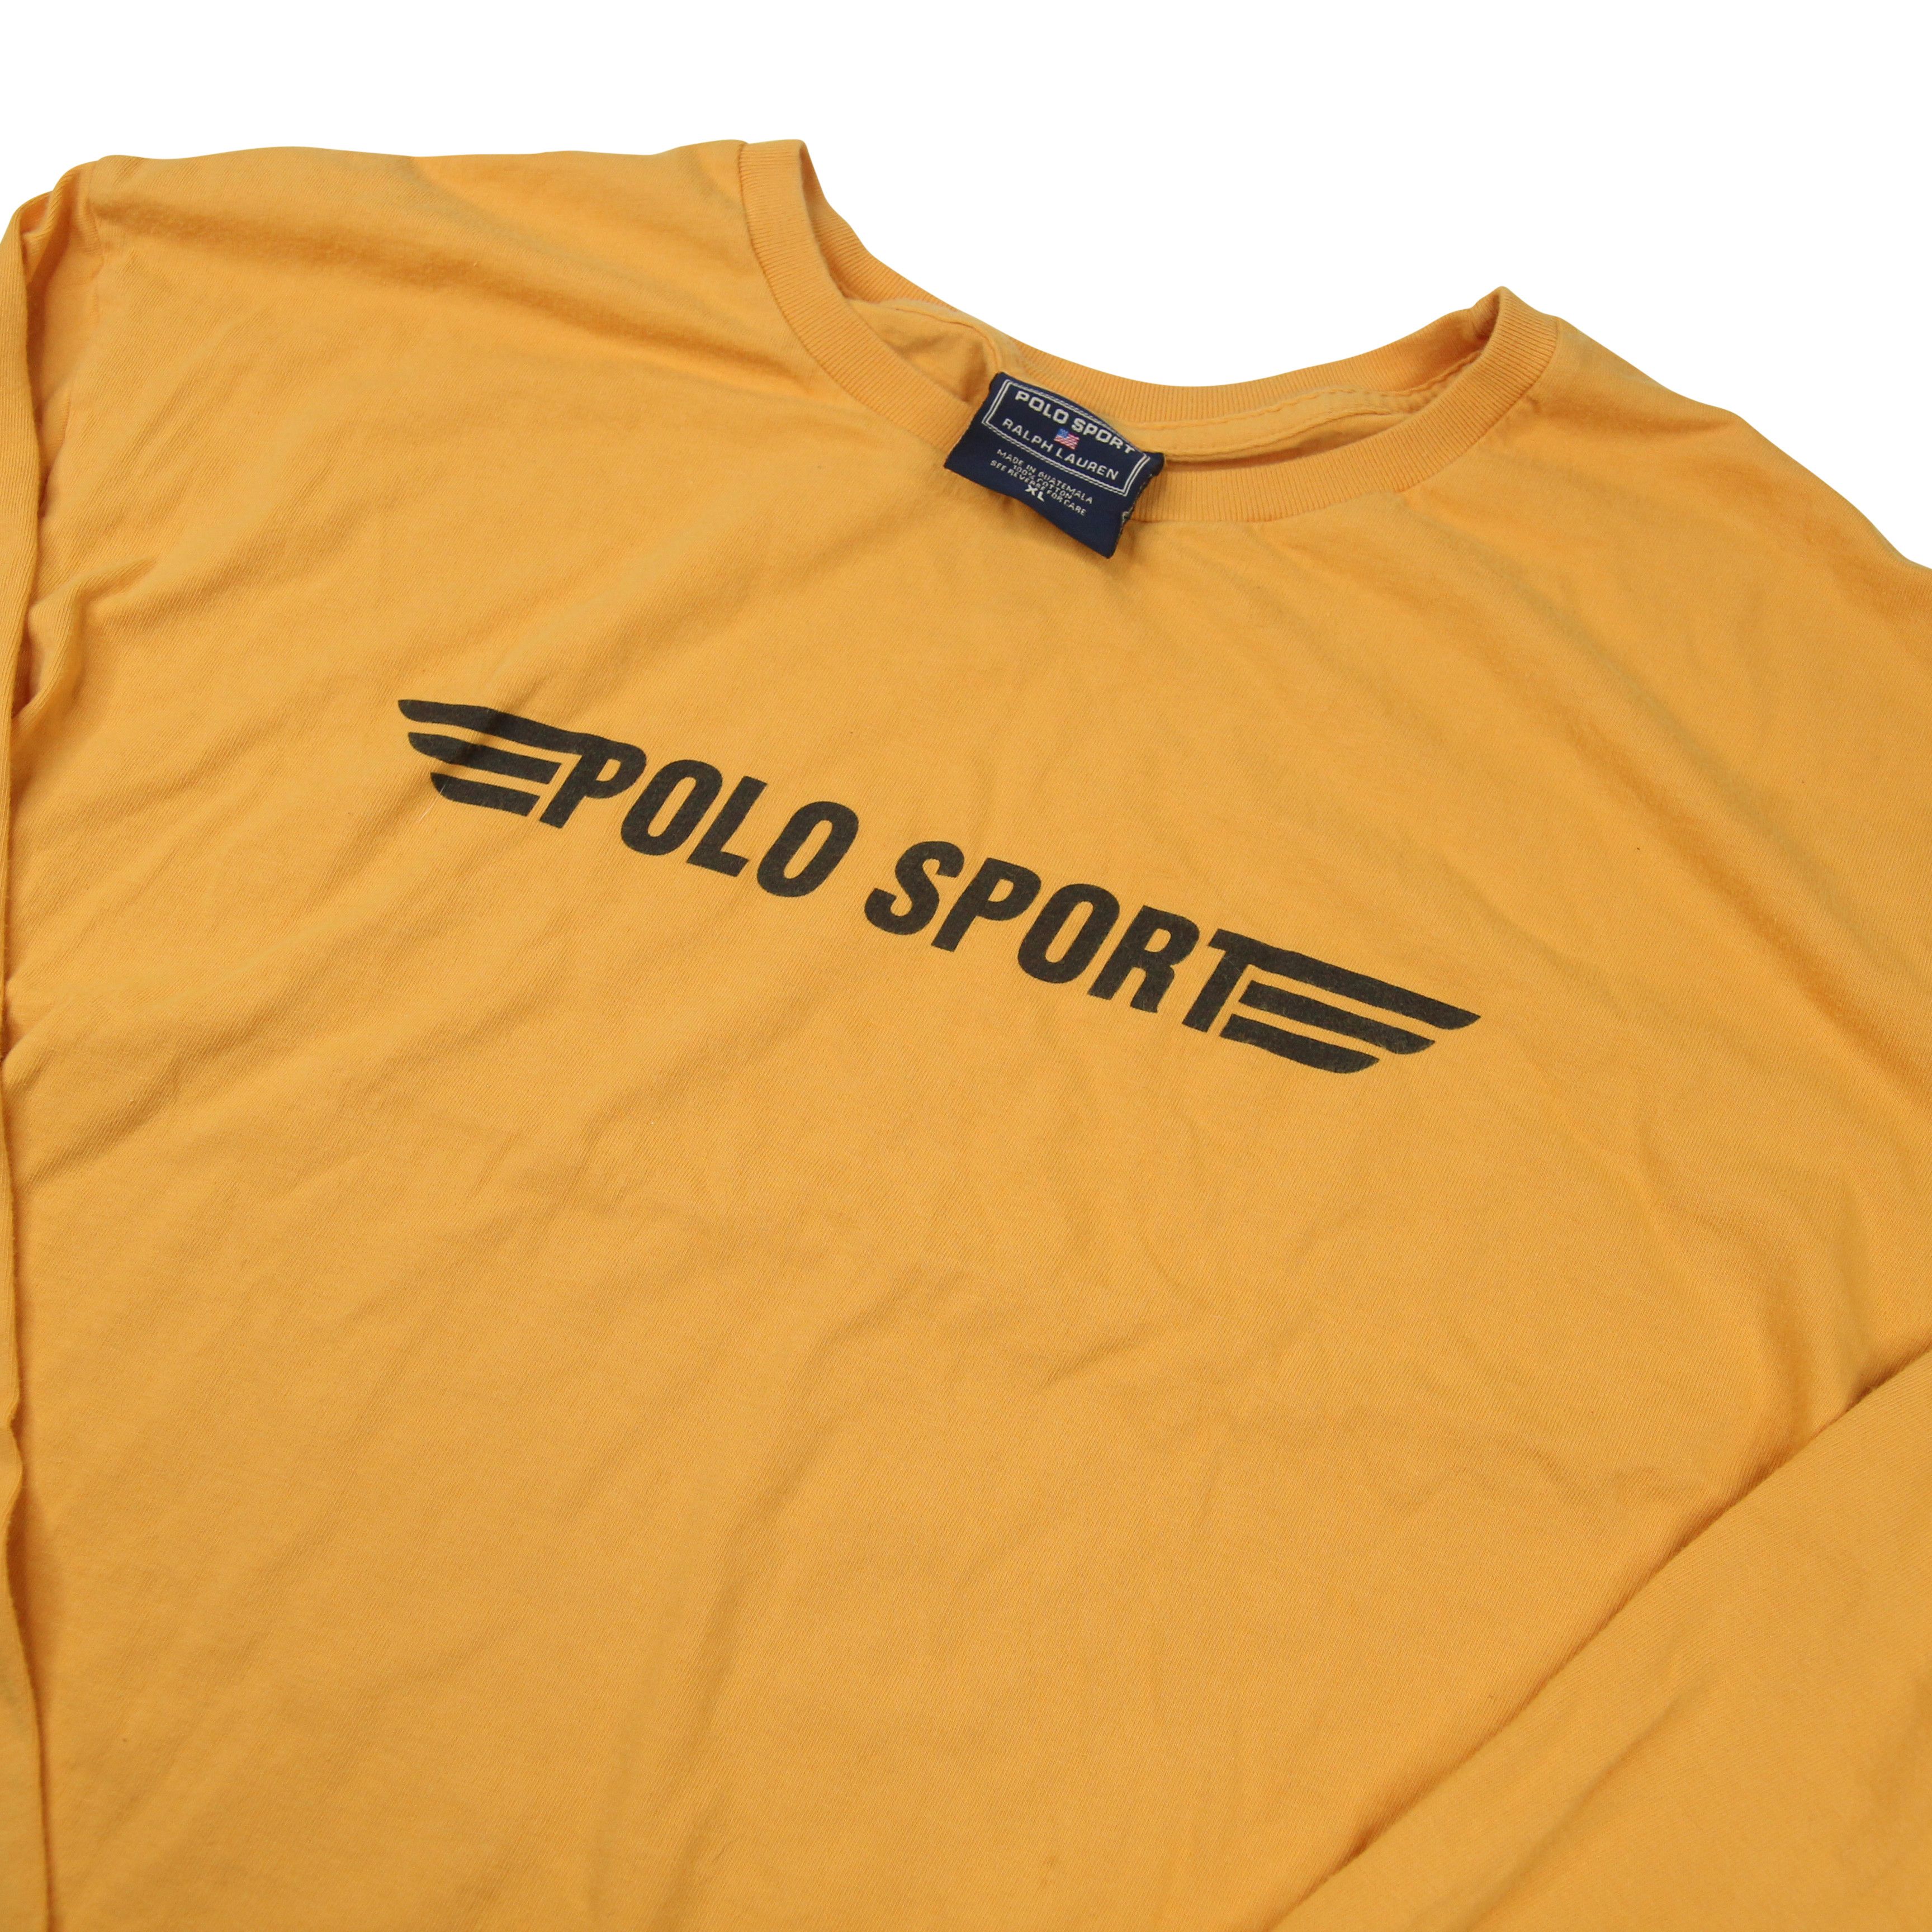 Polo Ralph Lauren Vintage Polo Sport RL Spellout Long Sleeve Shirt Size US XL / EU 56 / 4 - 2 Preview